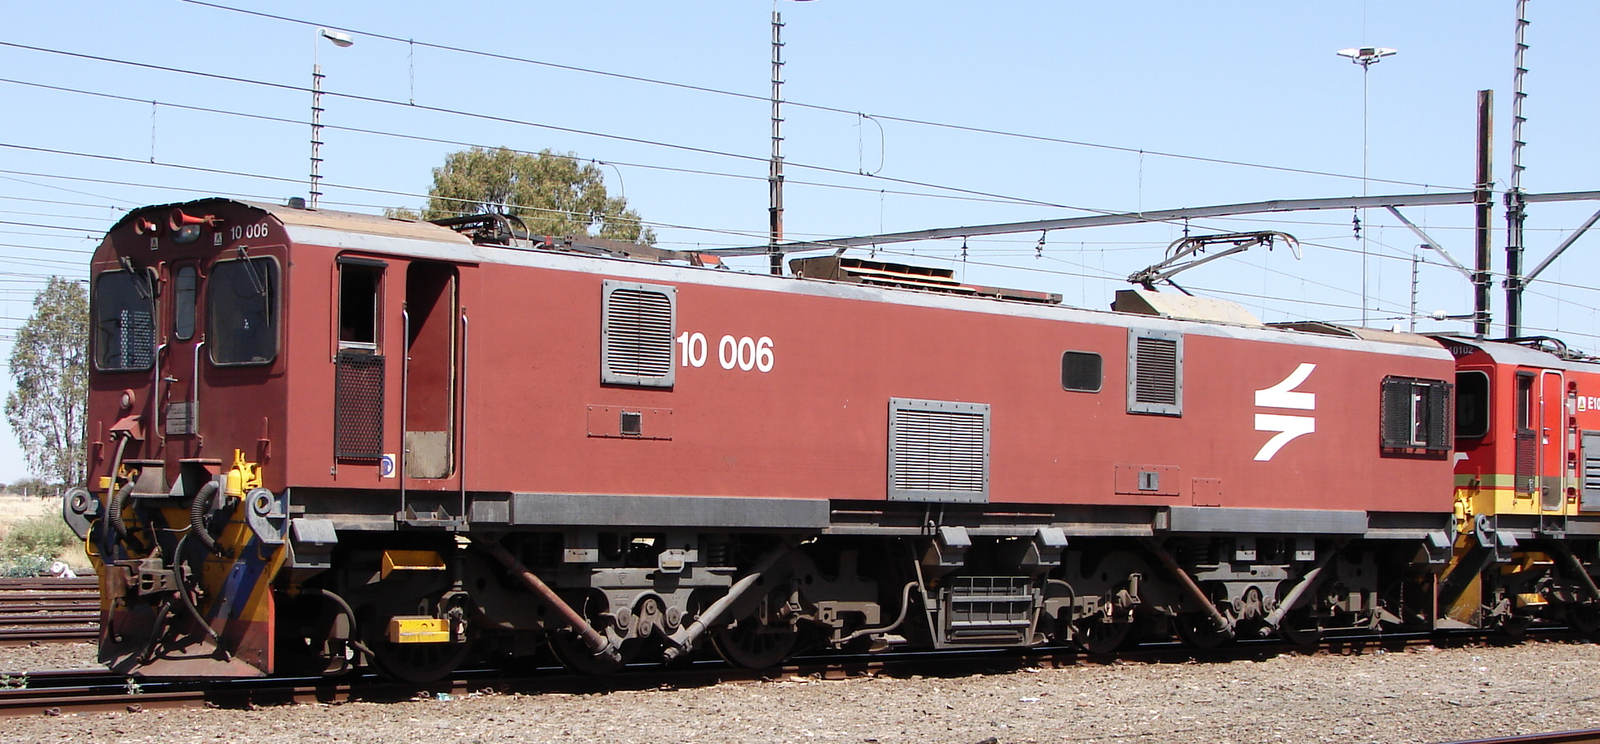 10 006 in September 2015 at Warrenton